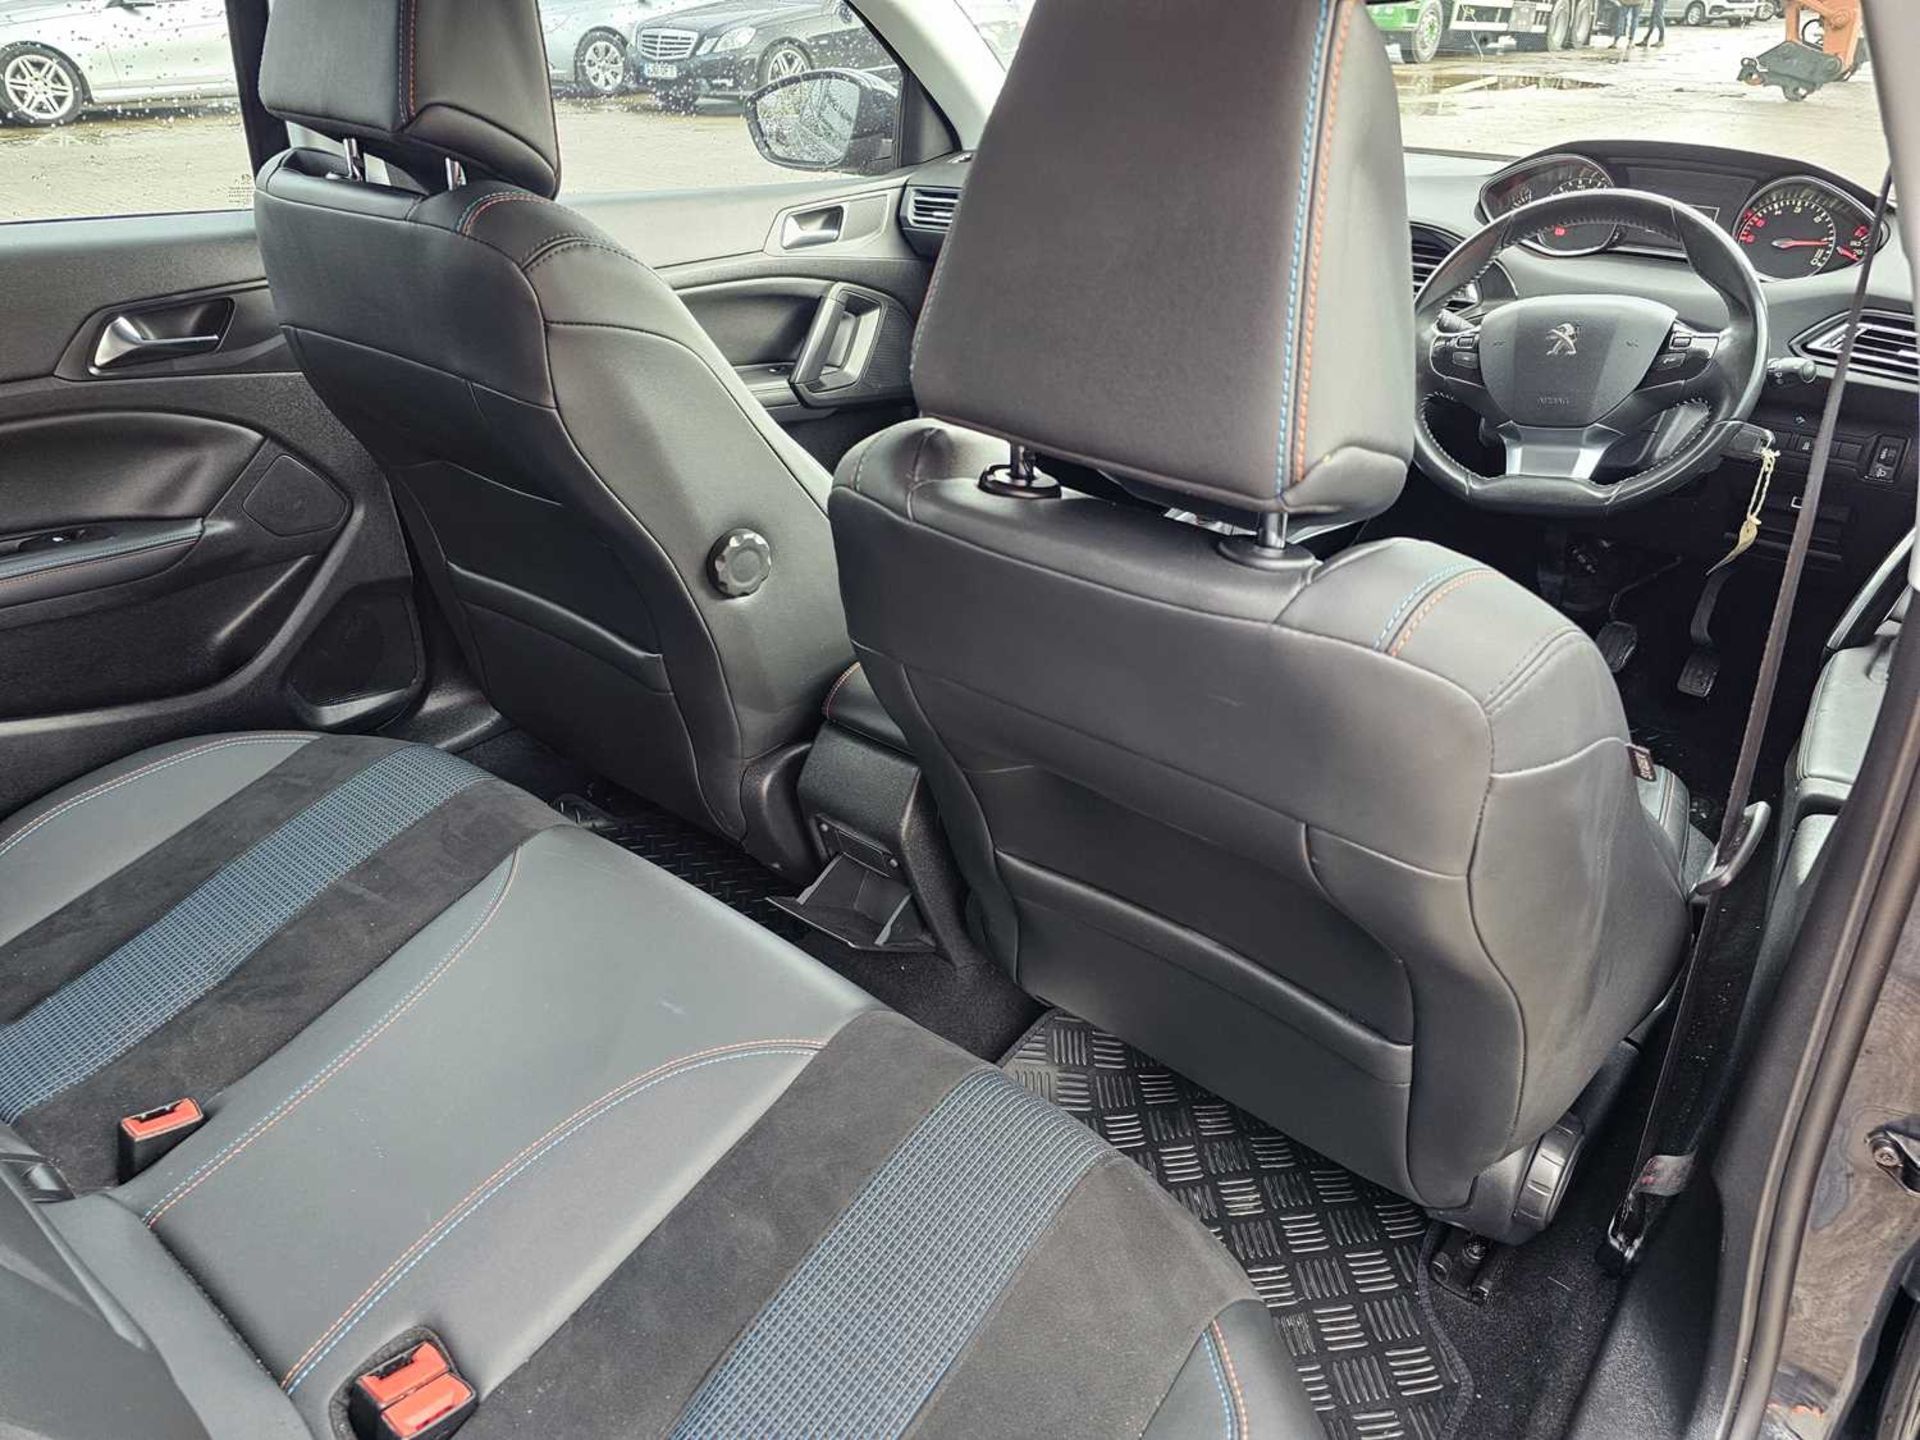 2014 Peugeot 308, 6 Speed, Parking Sensors, Half Leather, Bluetooth, Cruise Control, A/C (Reg. Docs. - Image 17 of 28